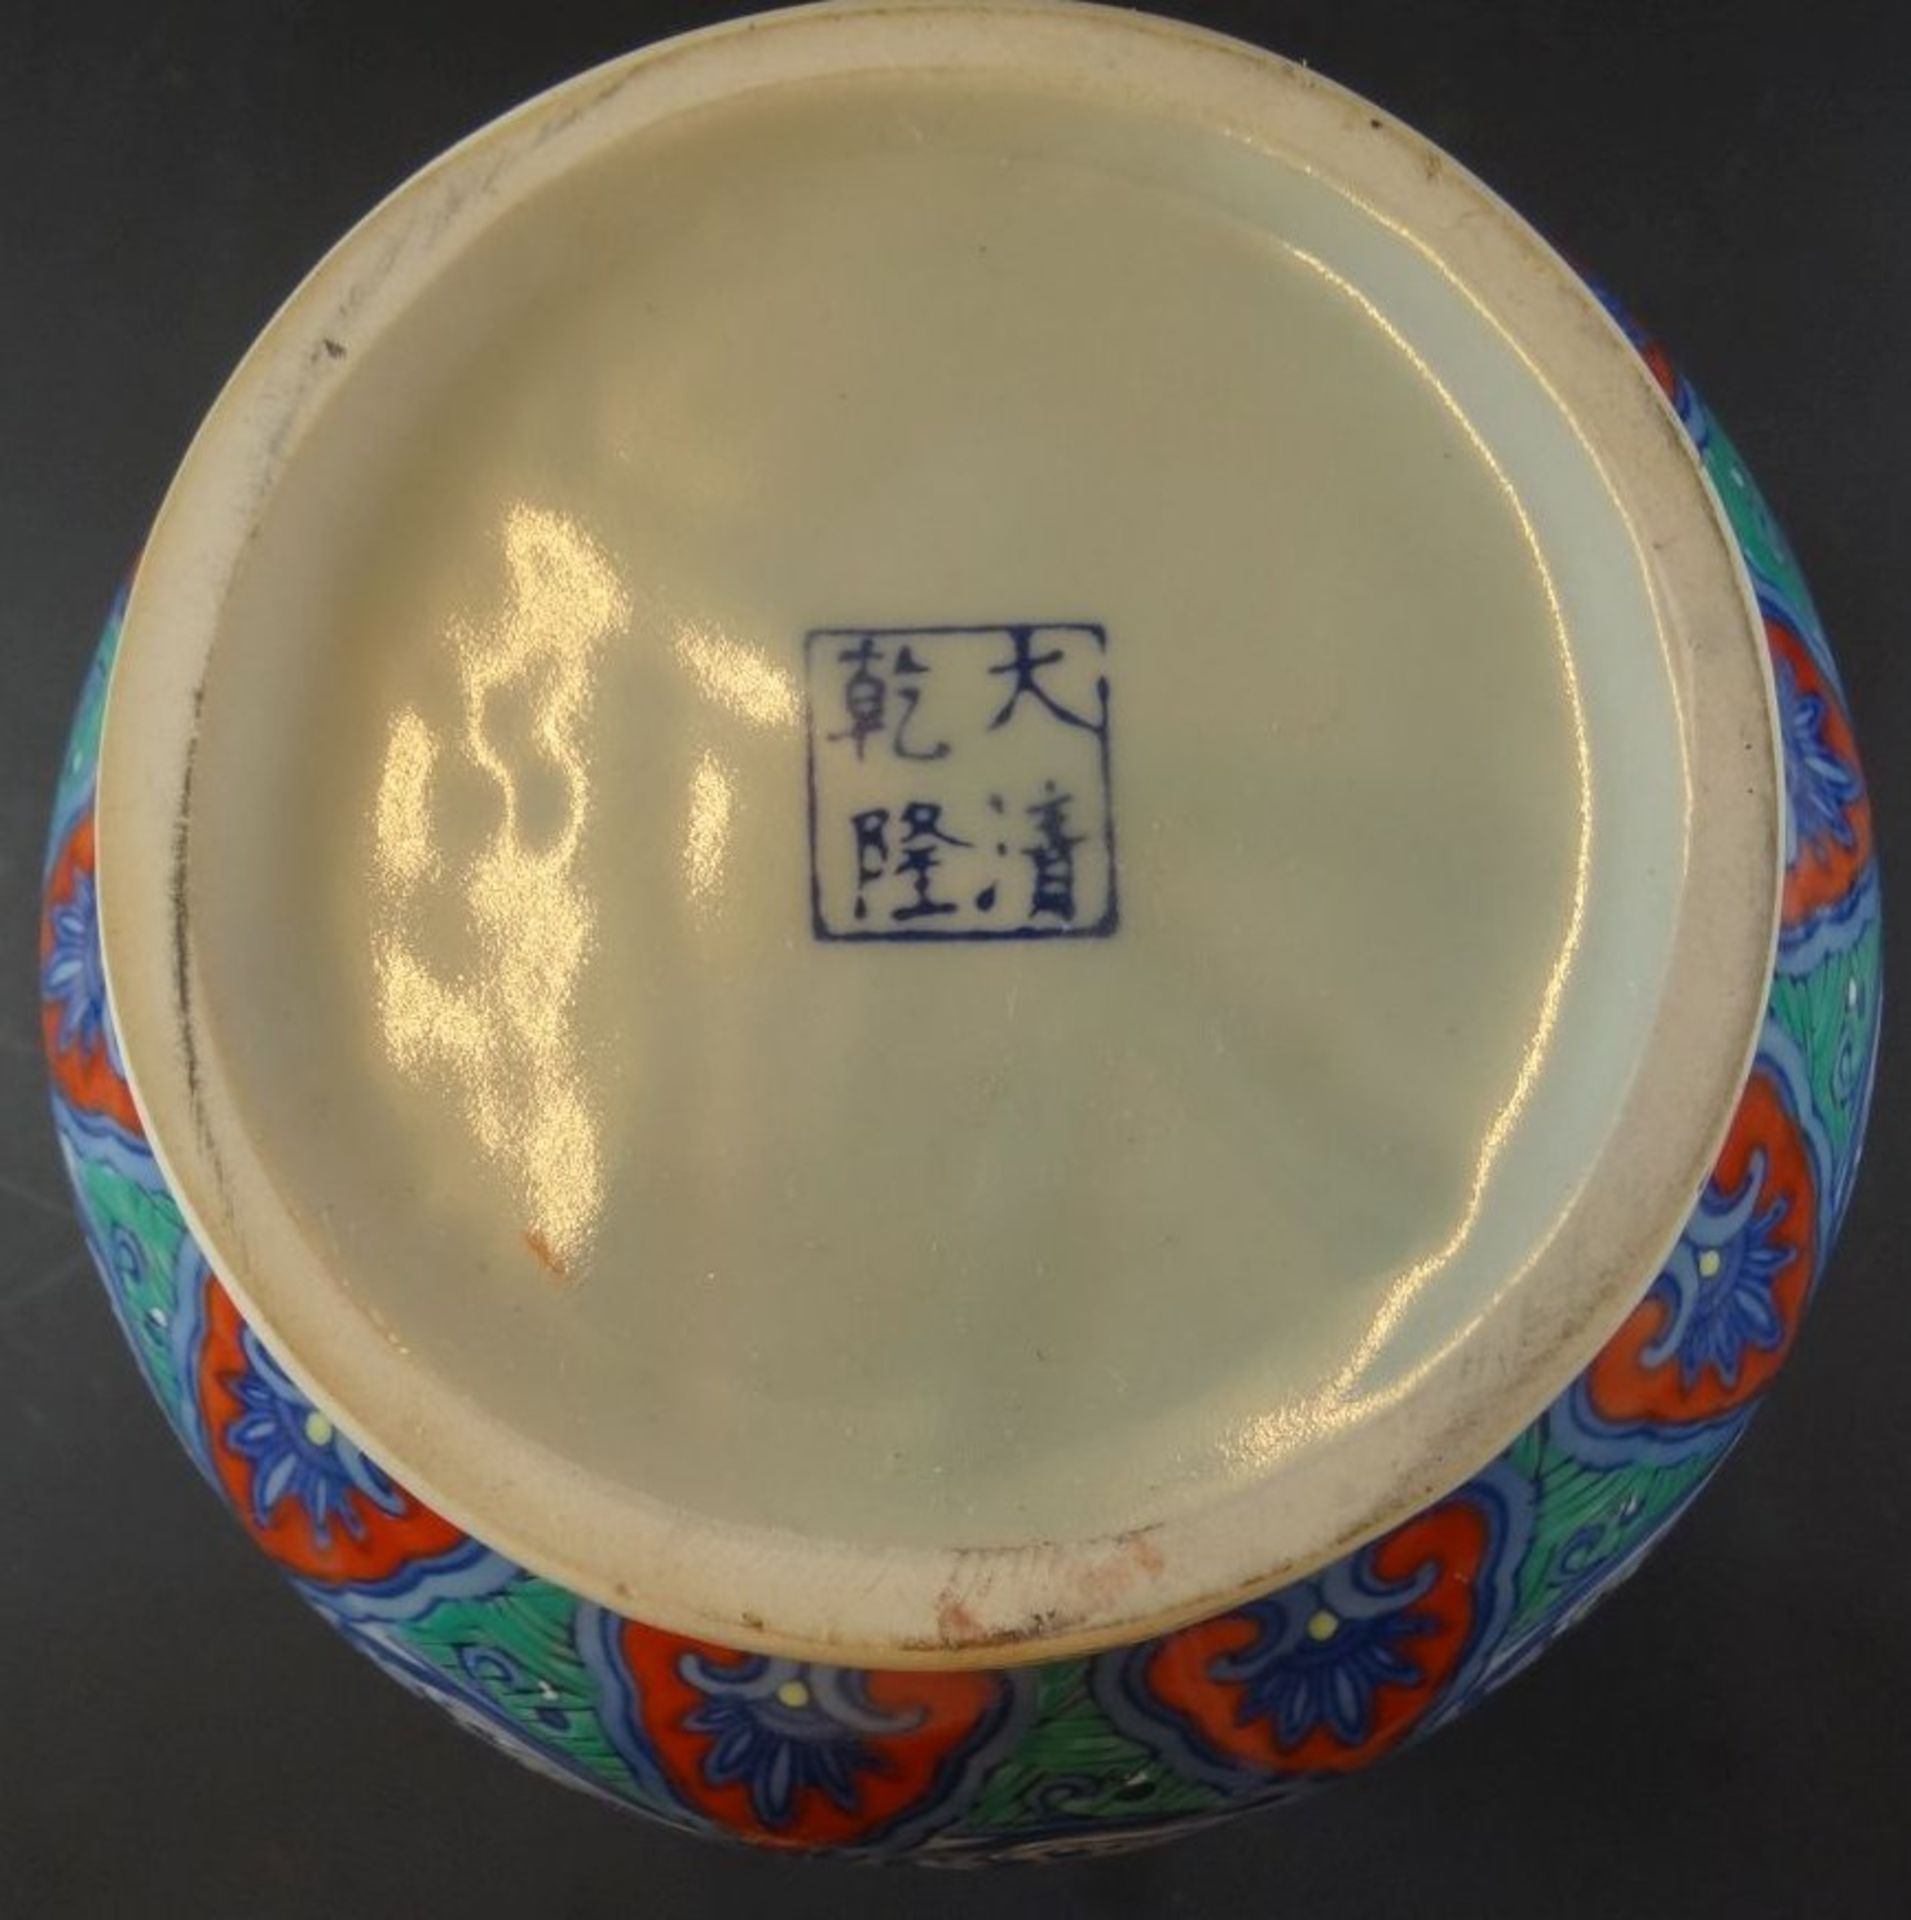 Vase mit Drachenmalerei, China, H-28 cm, chines. gemarkt - Image 6 of 6